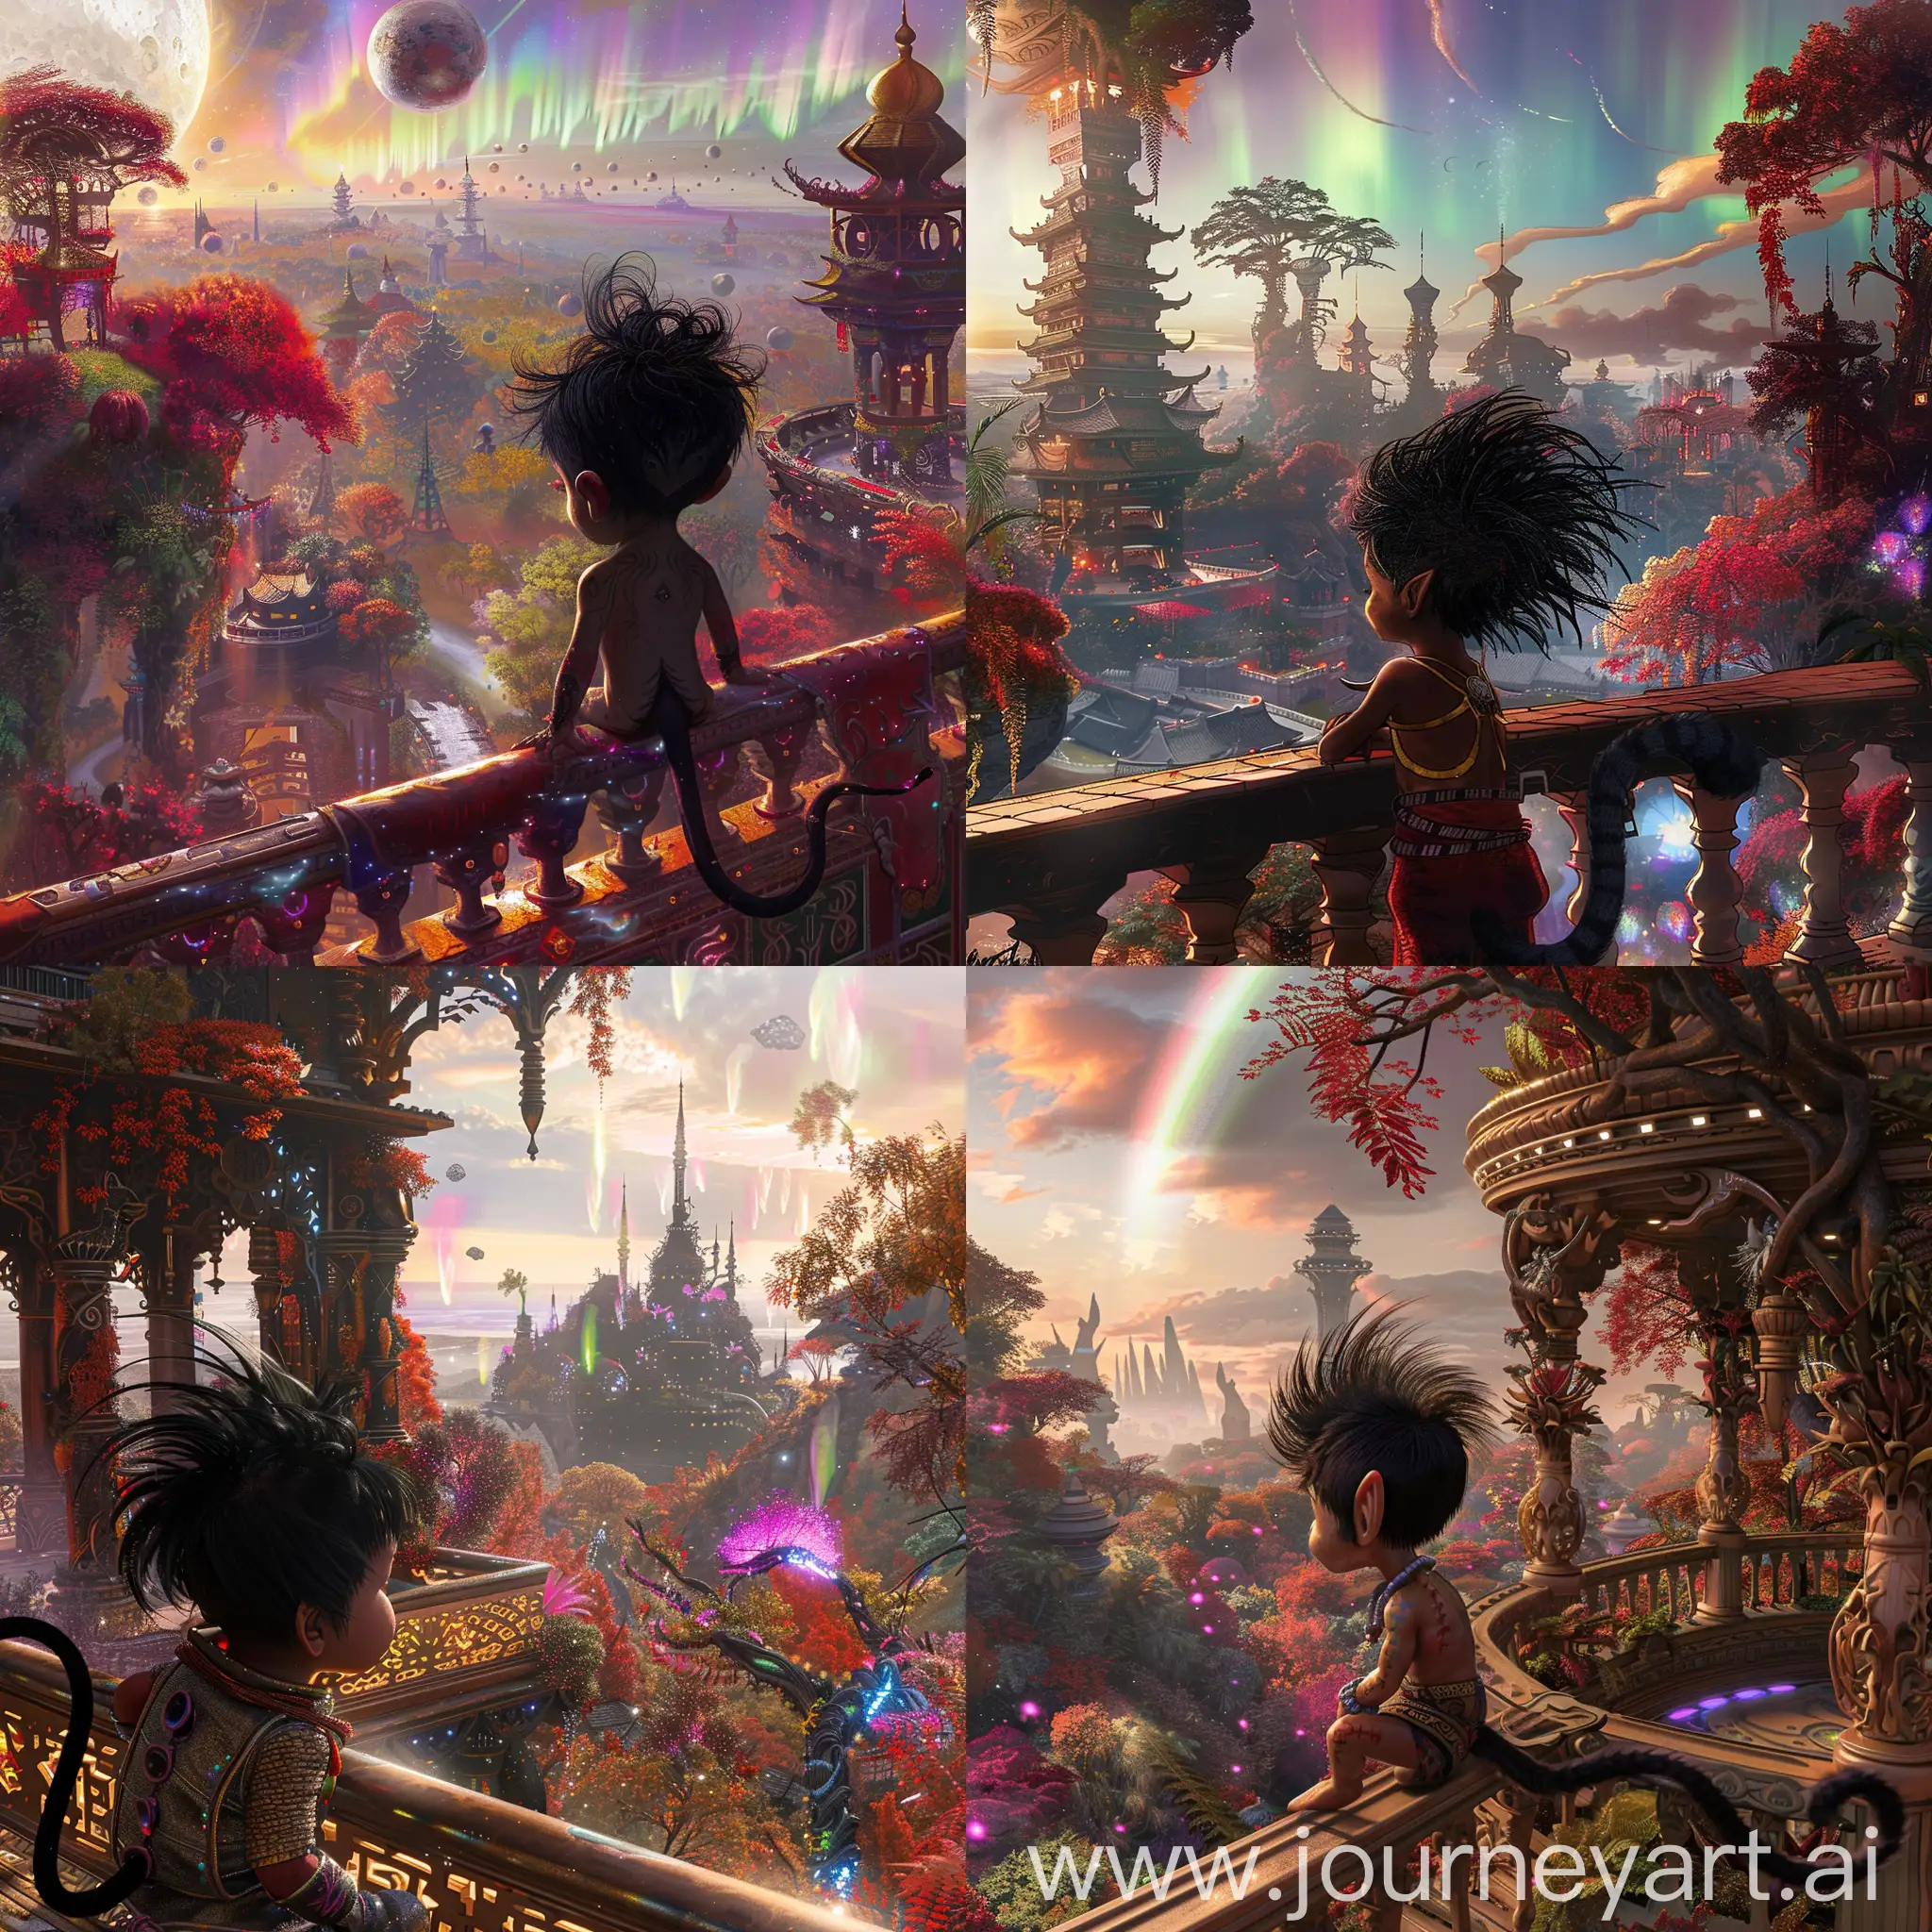 Adventurous-Little-Boy-with-Monkey-Tail-in-Futuristic-Solarpunk-Terrace-Overlooking-Extraterrestrial-City